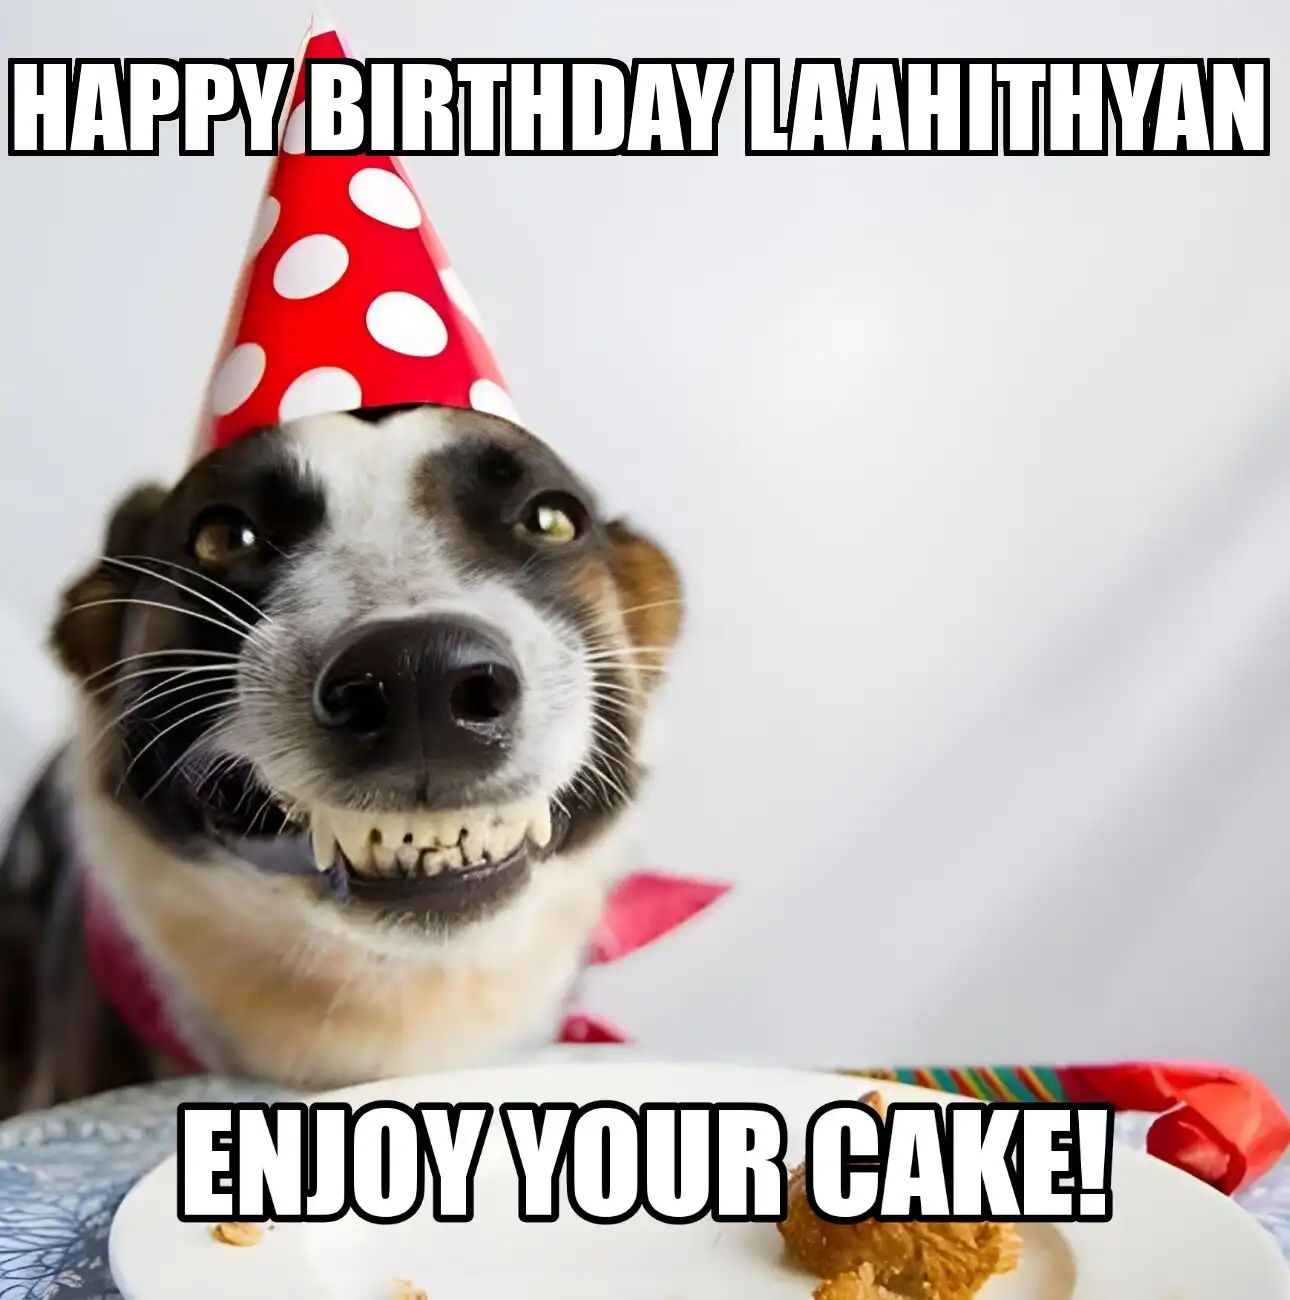 Happy Birthday Laahithyan Enjoy Your Cake Dog Meme